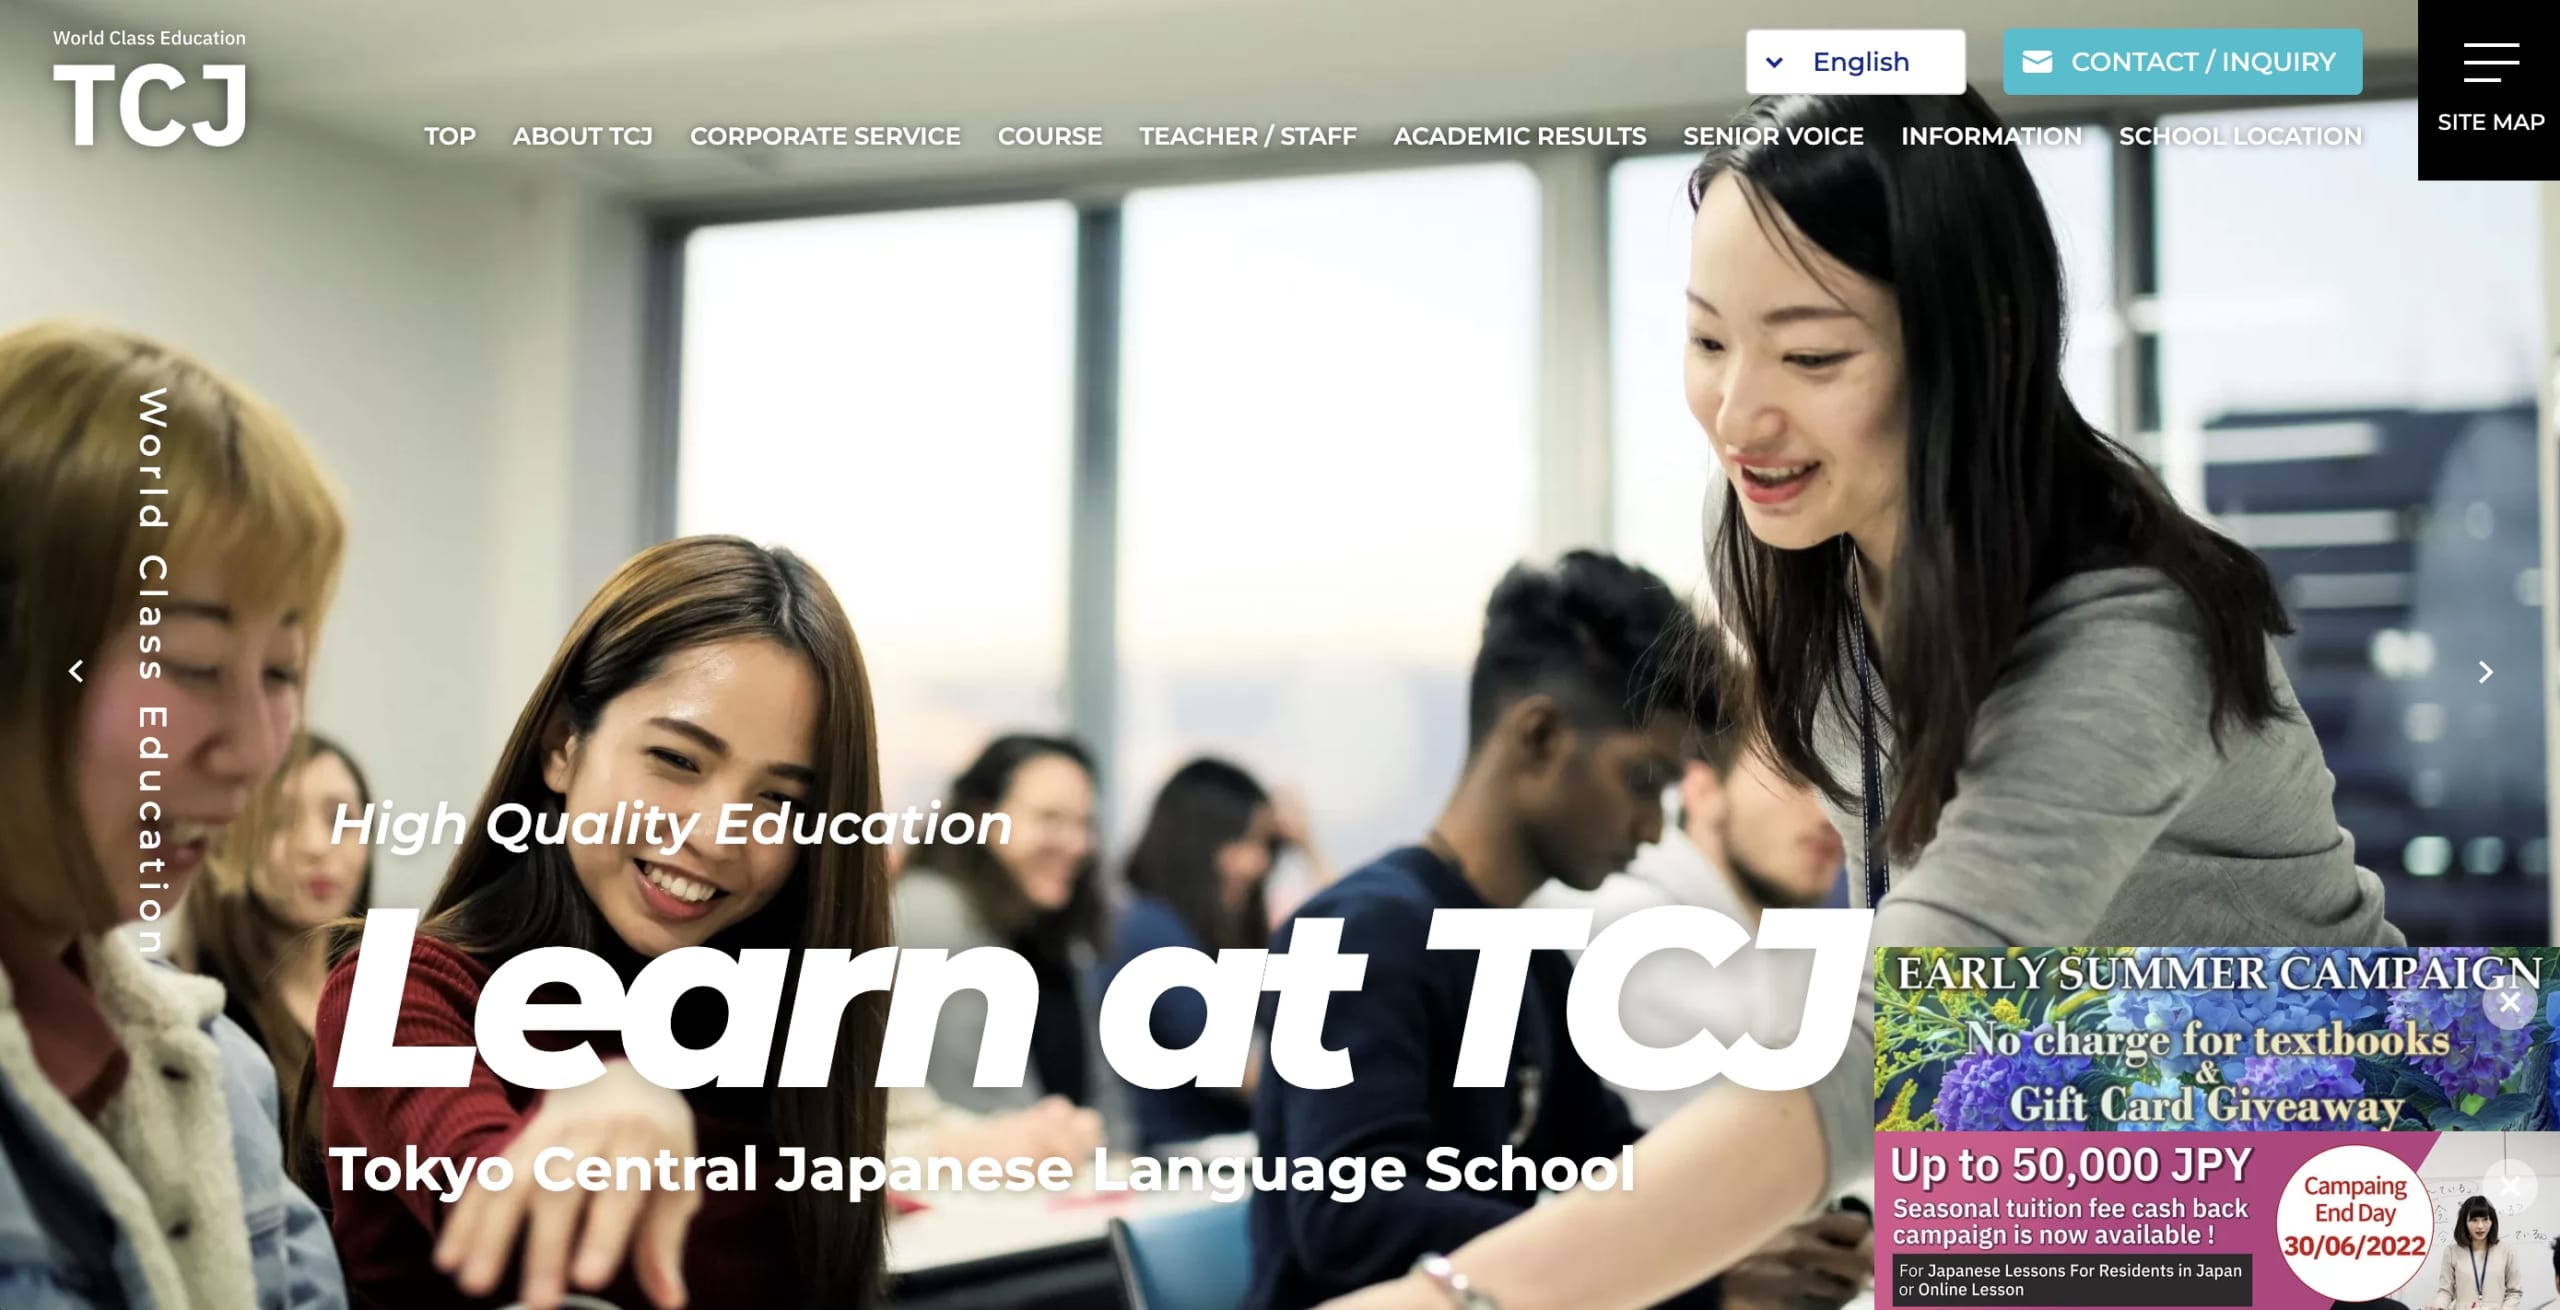 TCJ (Tokyo Central Japanese Language School)